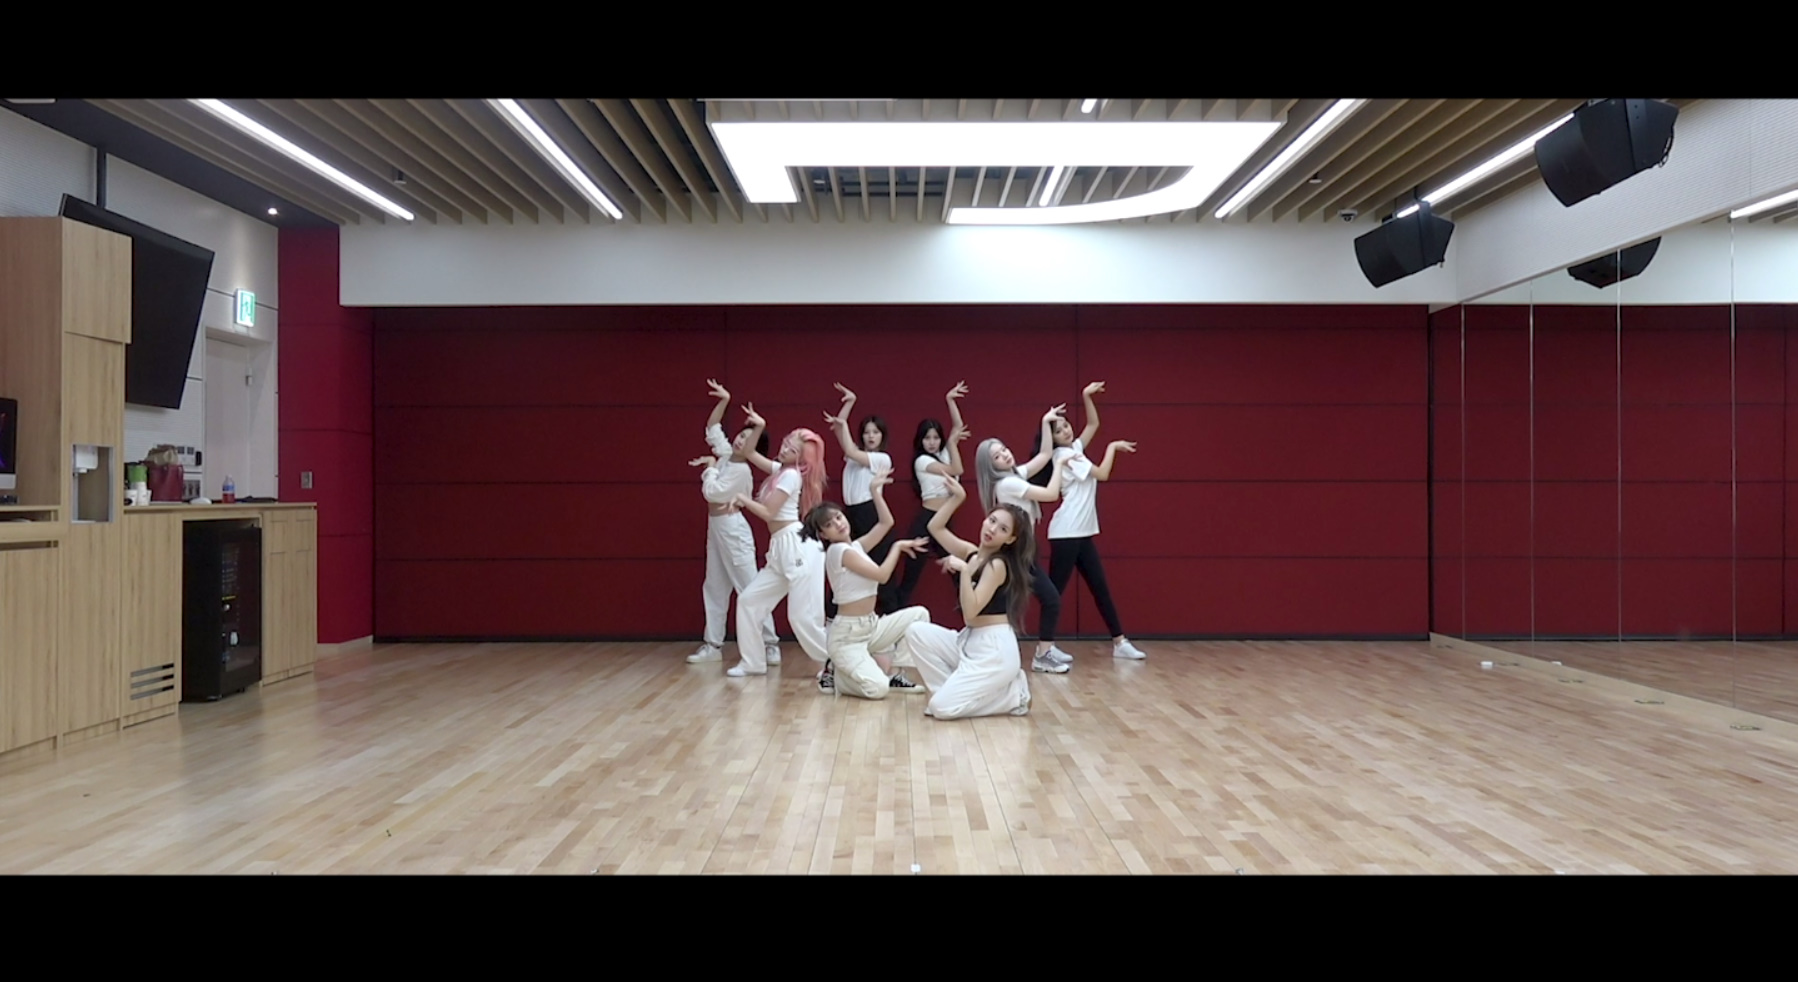 TWICE "Feel Special" Dance Practice Video